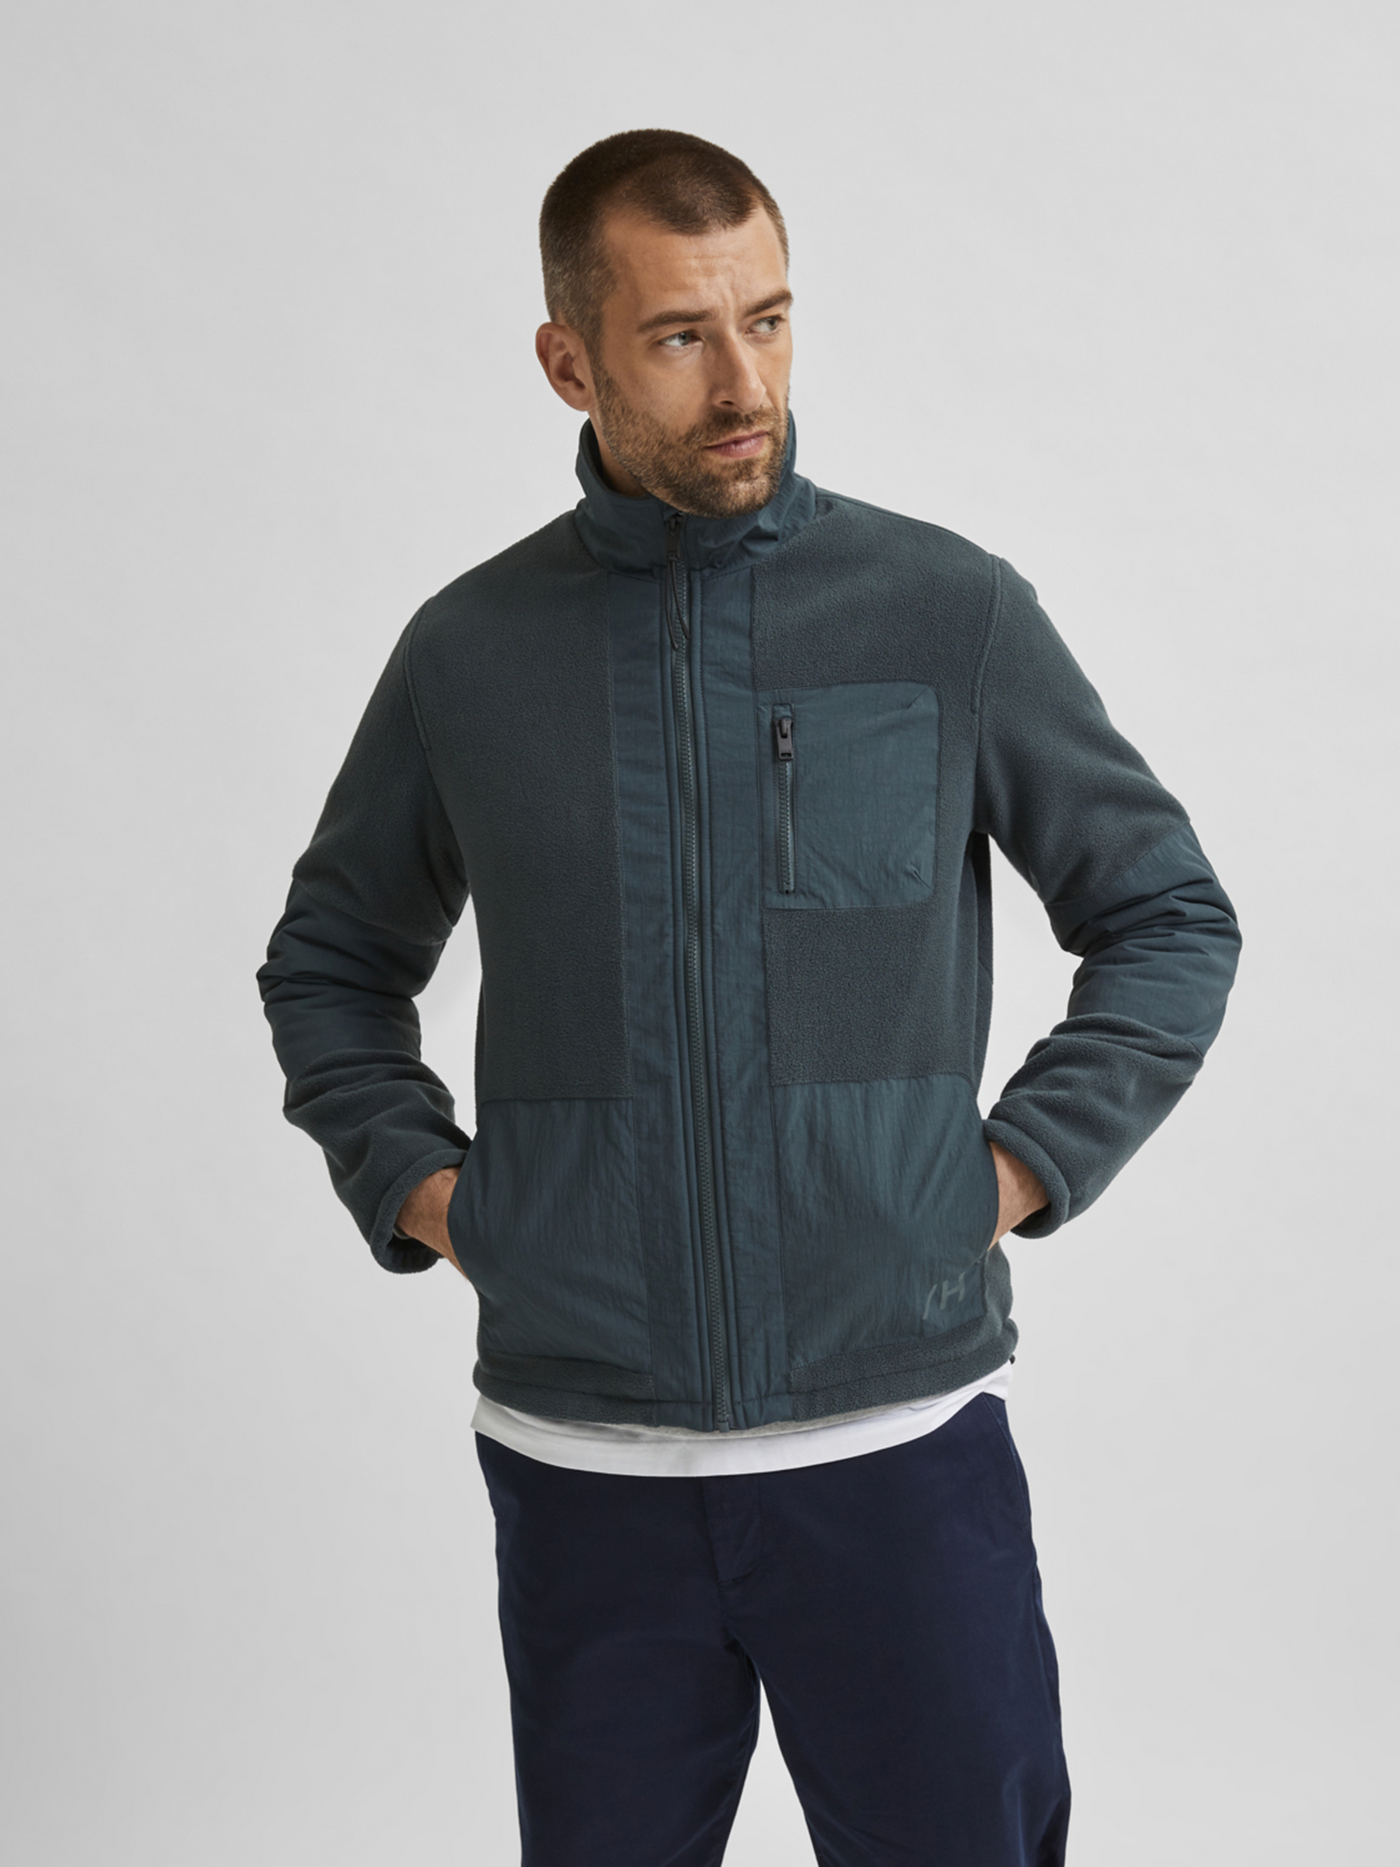 Nohr Fleece Jacket - Urban Chic - Selected Homme